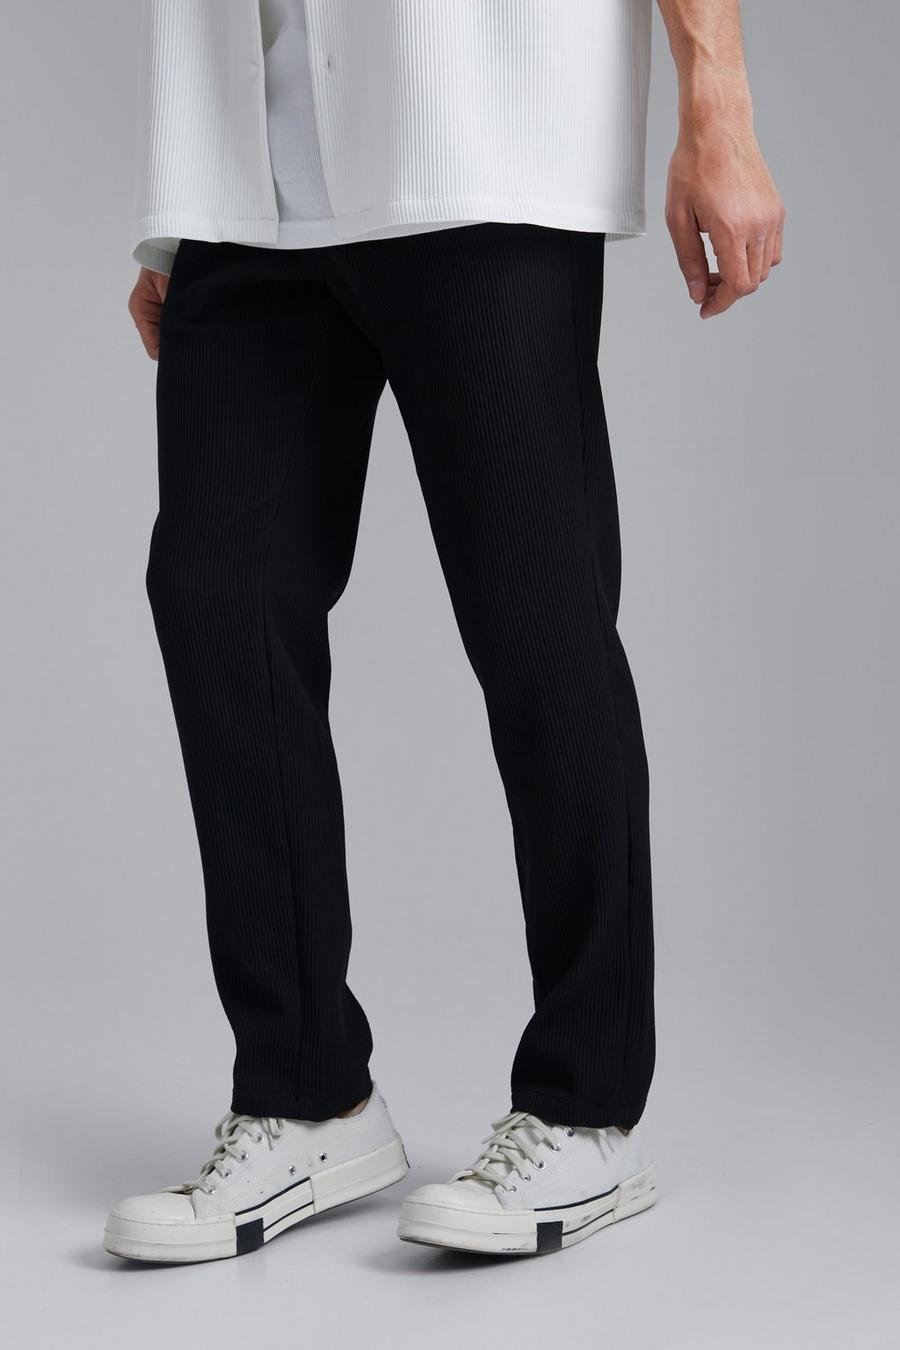 Pantalón plisado ajustado, Black negro image number 1